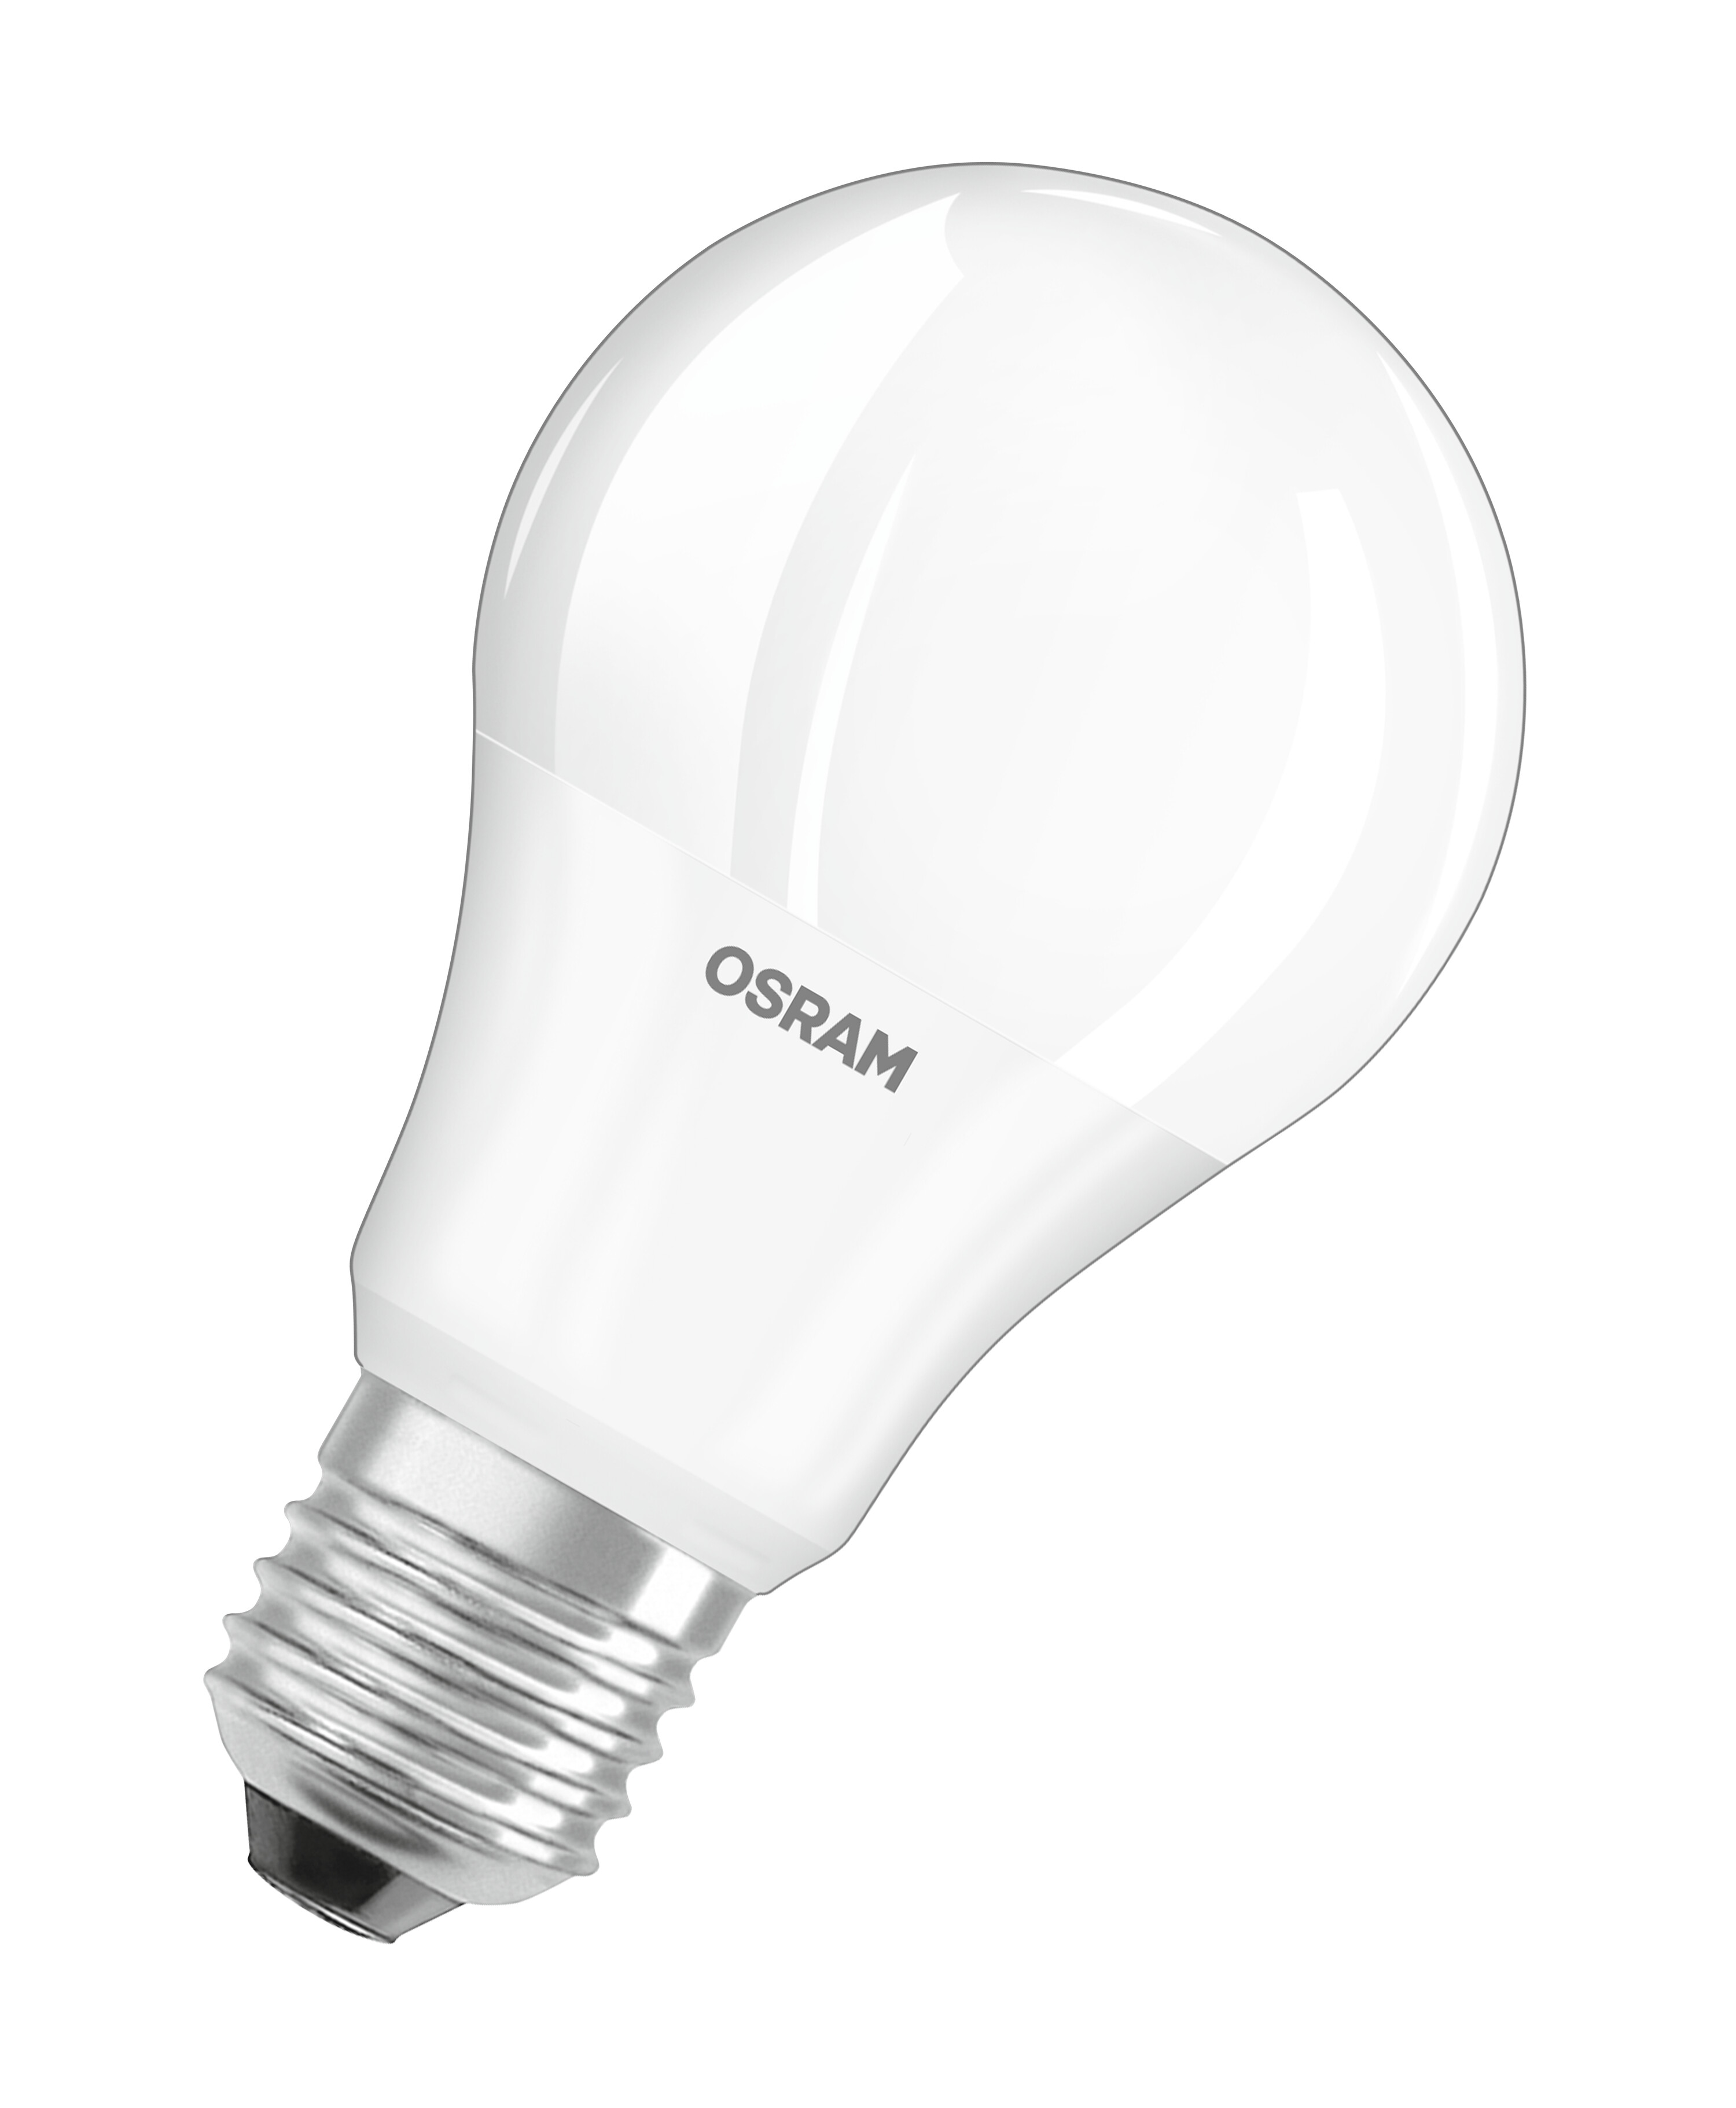 OSRAM  LED BASE CLASSIC A FR 8.5 W/2700 Lampe Lumen 806 60 E27 Warmweiß LED